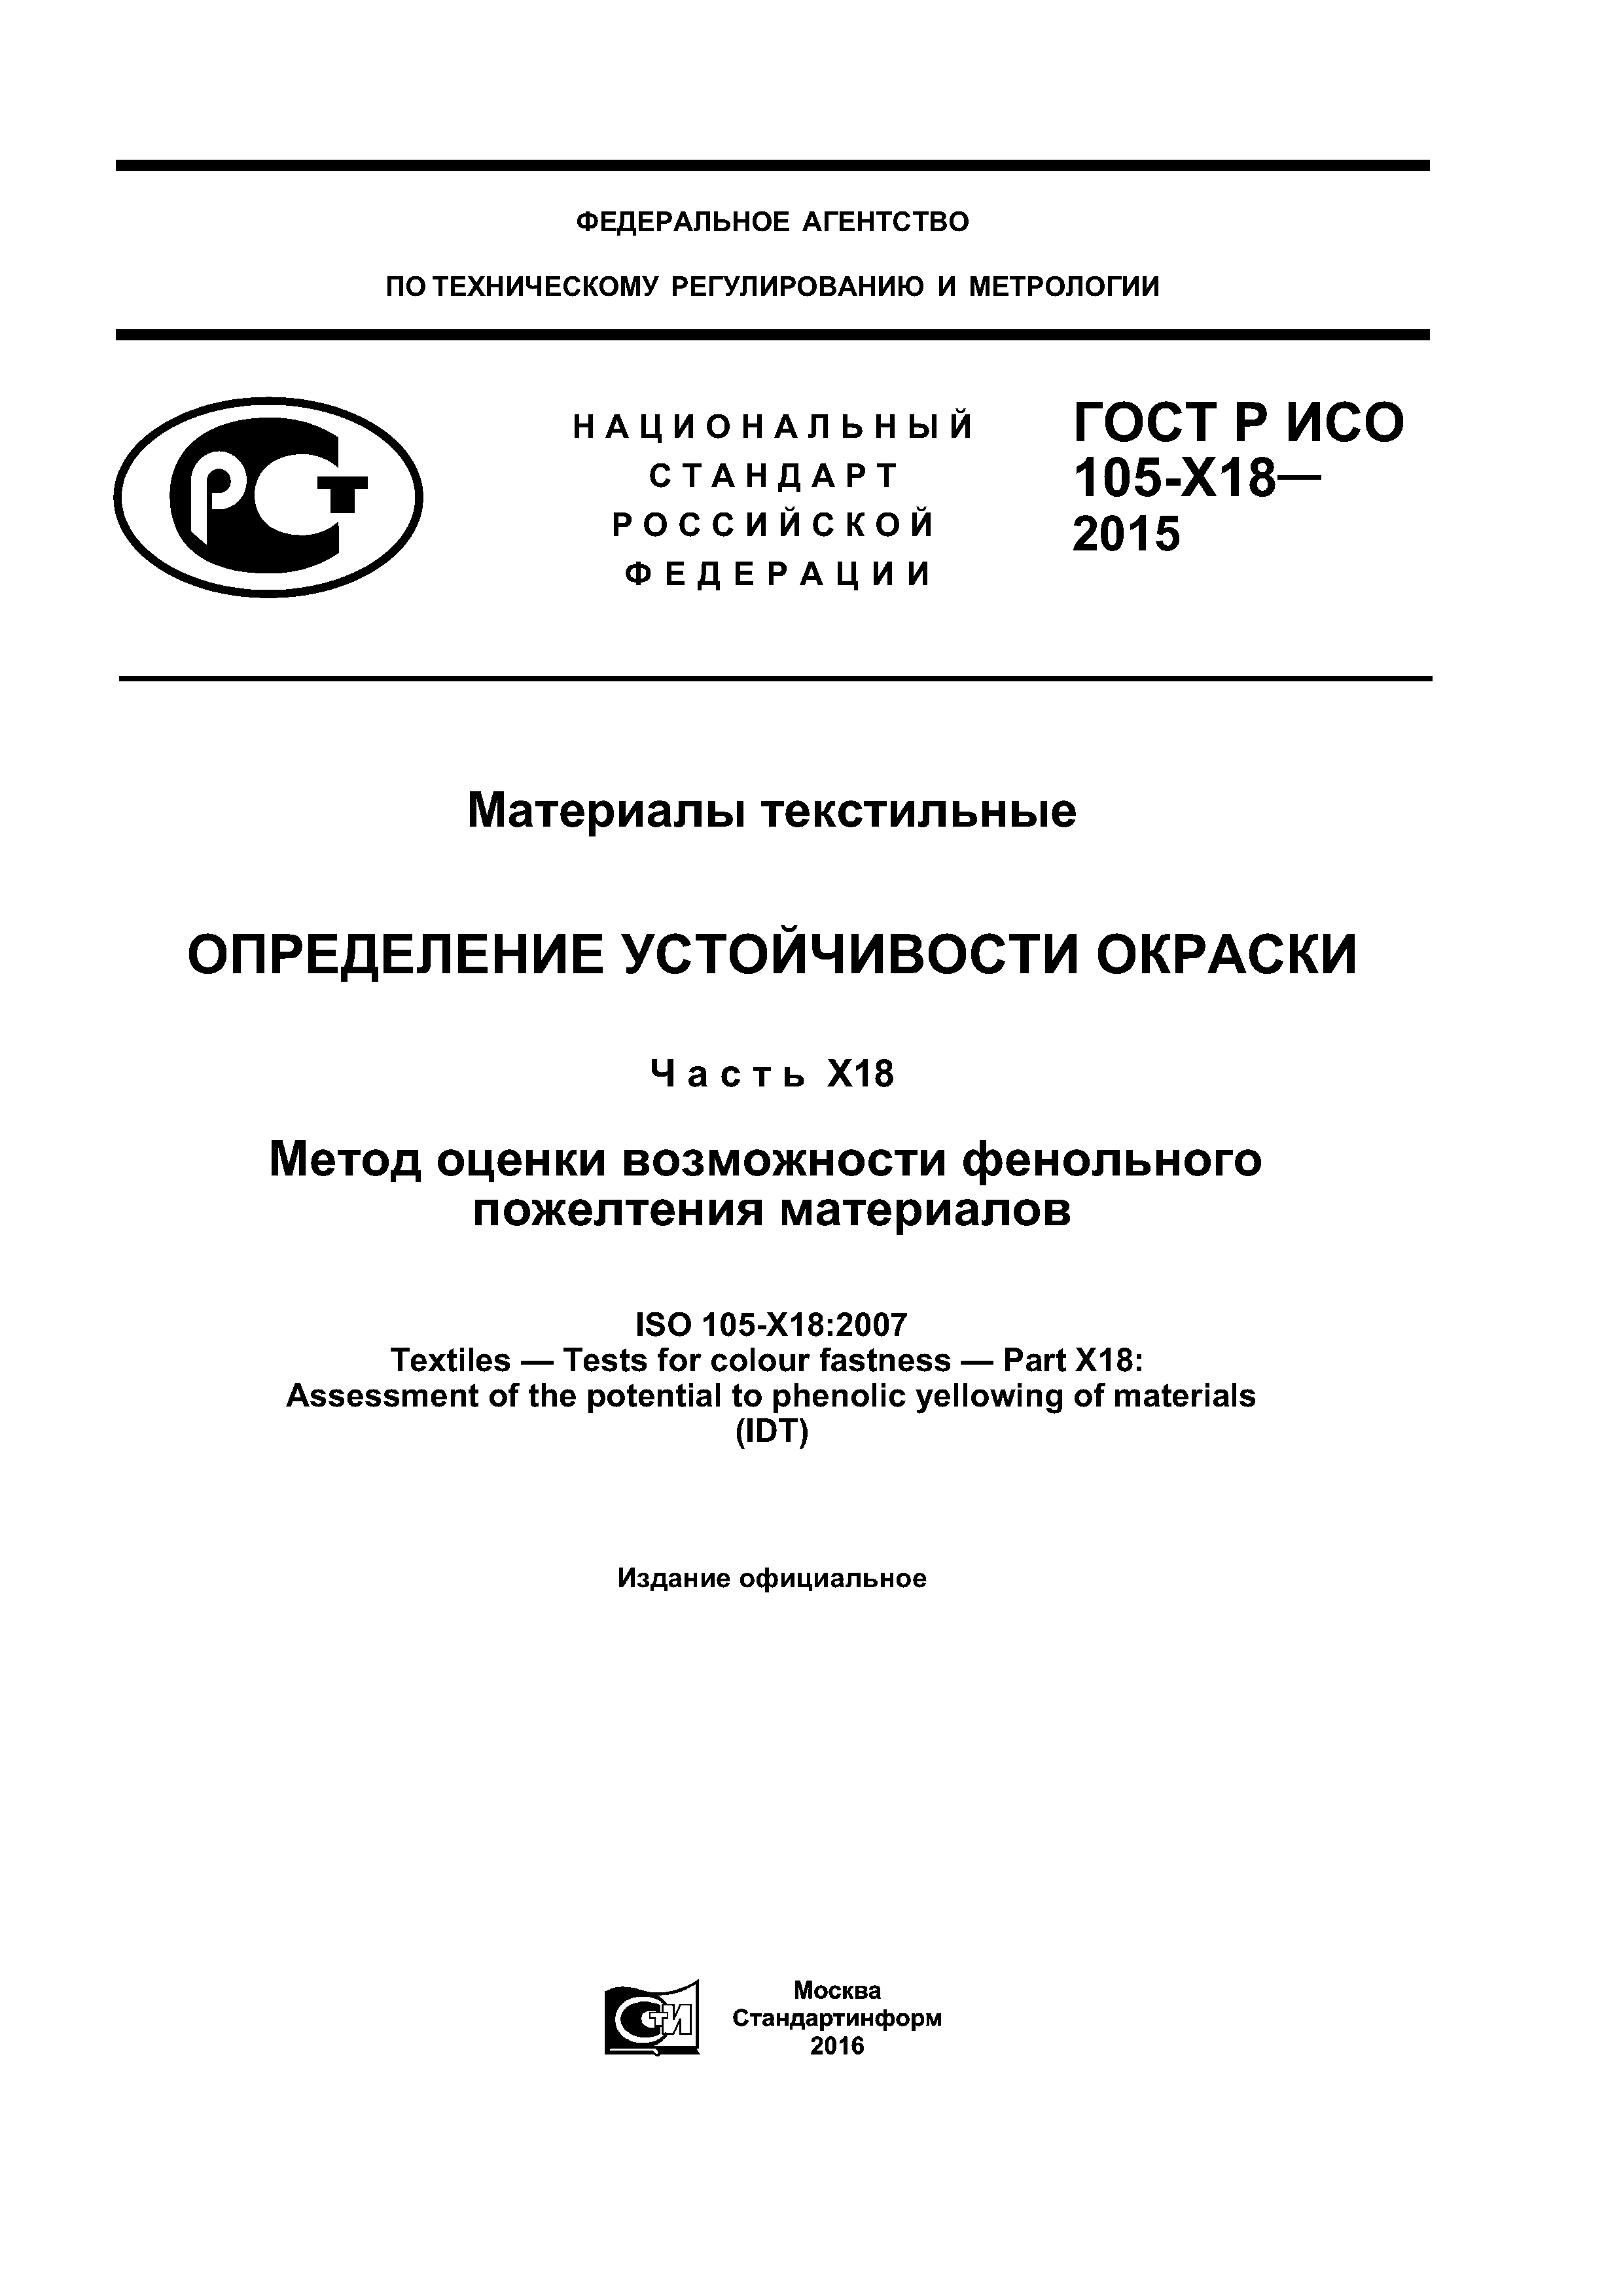 ГОСТ Р ИСО 105-X18-2015